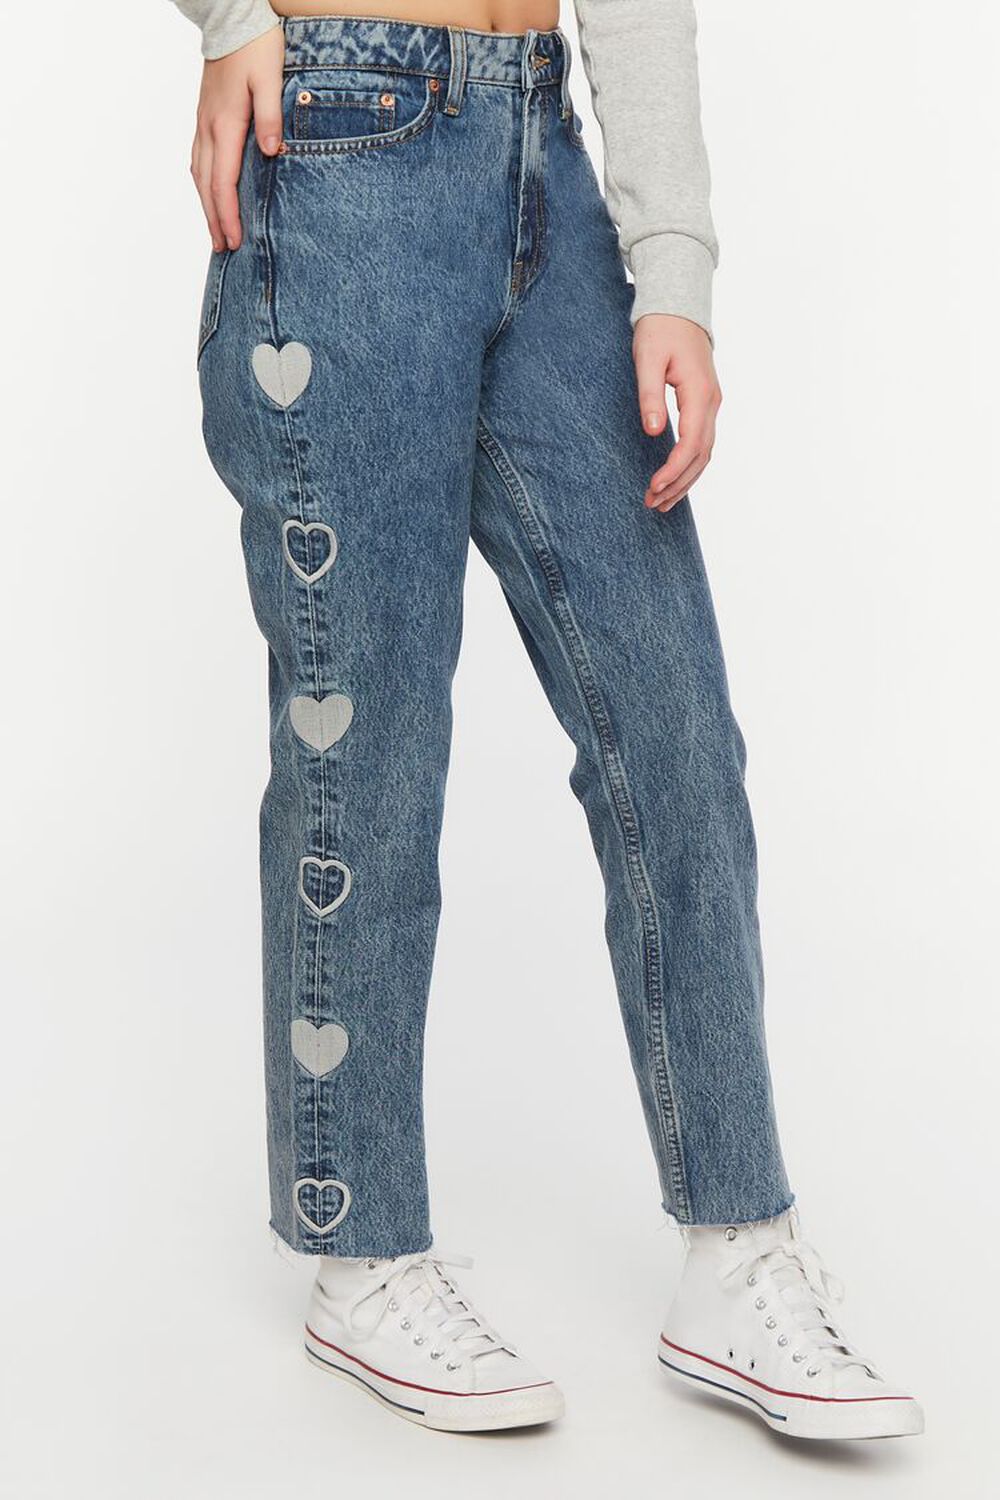 MEDIUM DENIM Heart Embroidered Straight-Leg Jeans, image 2